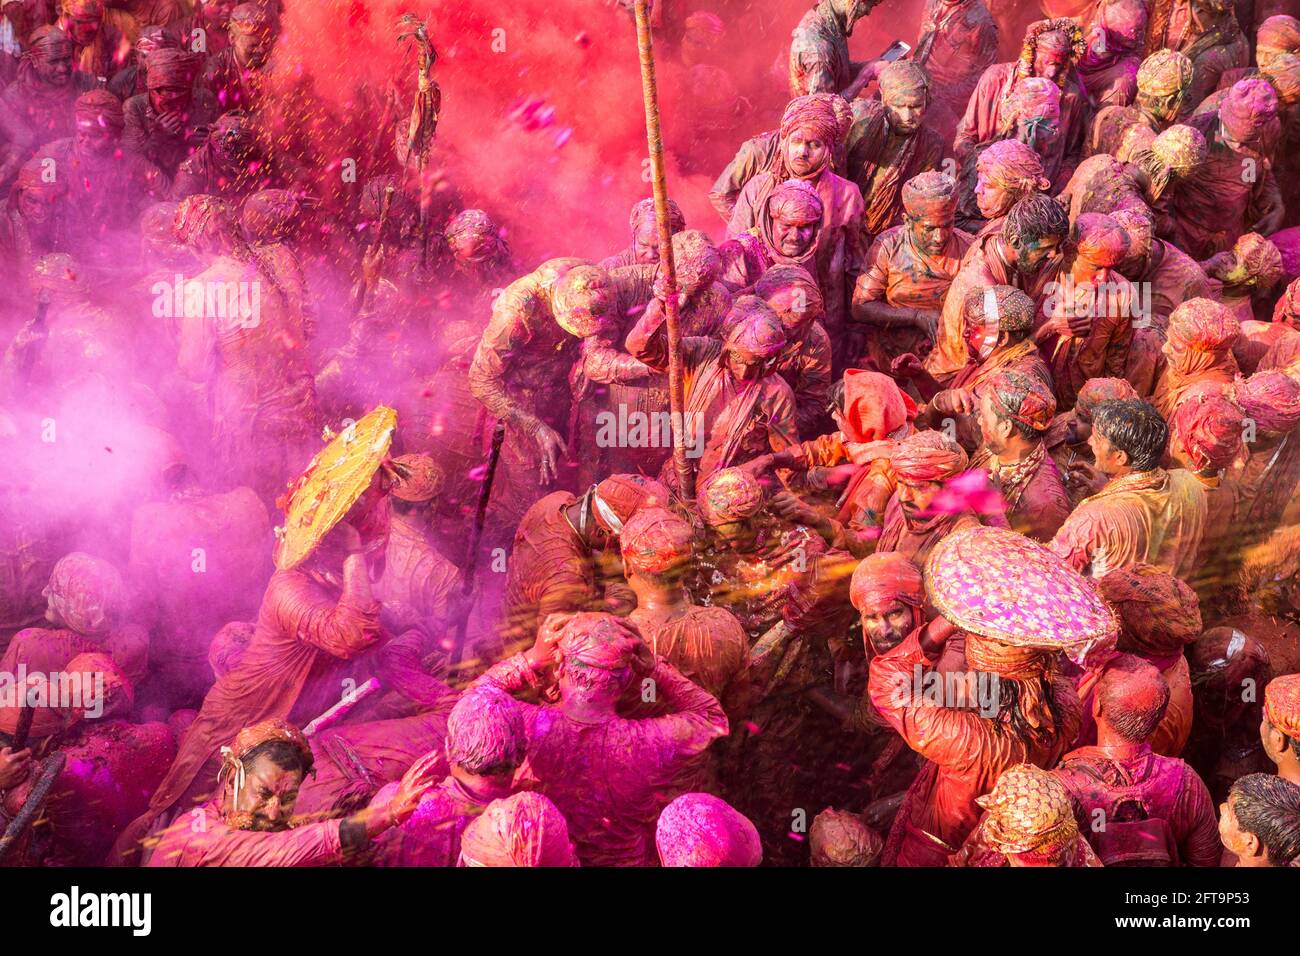 Lathmar Holi 2017 Barsana Nandgaon Vrindavan Festivals across India Festival of Colours across India Stock Photo